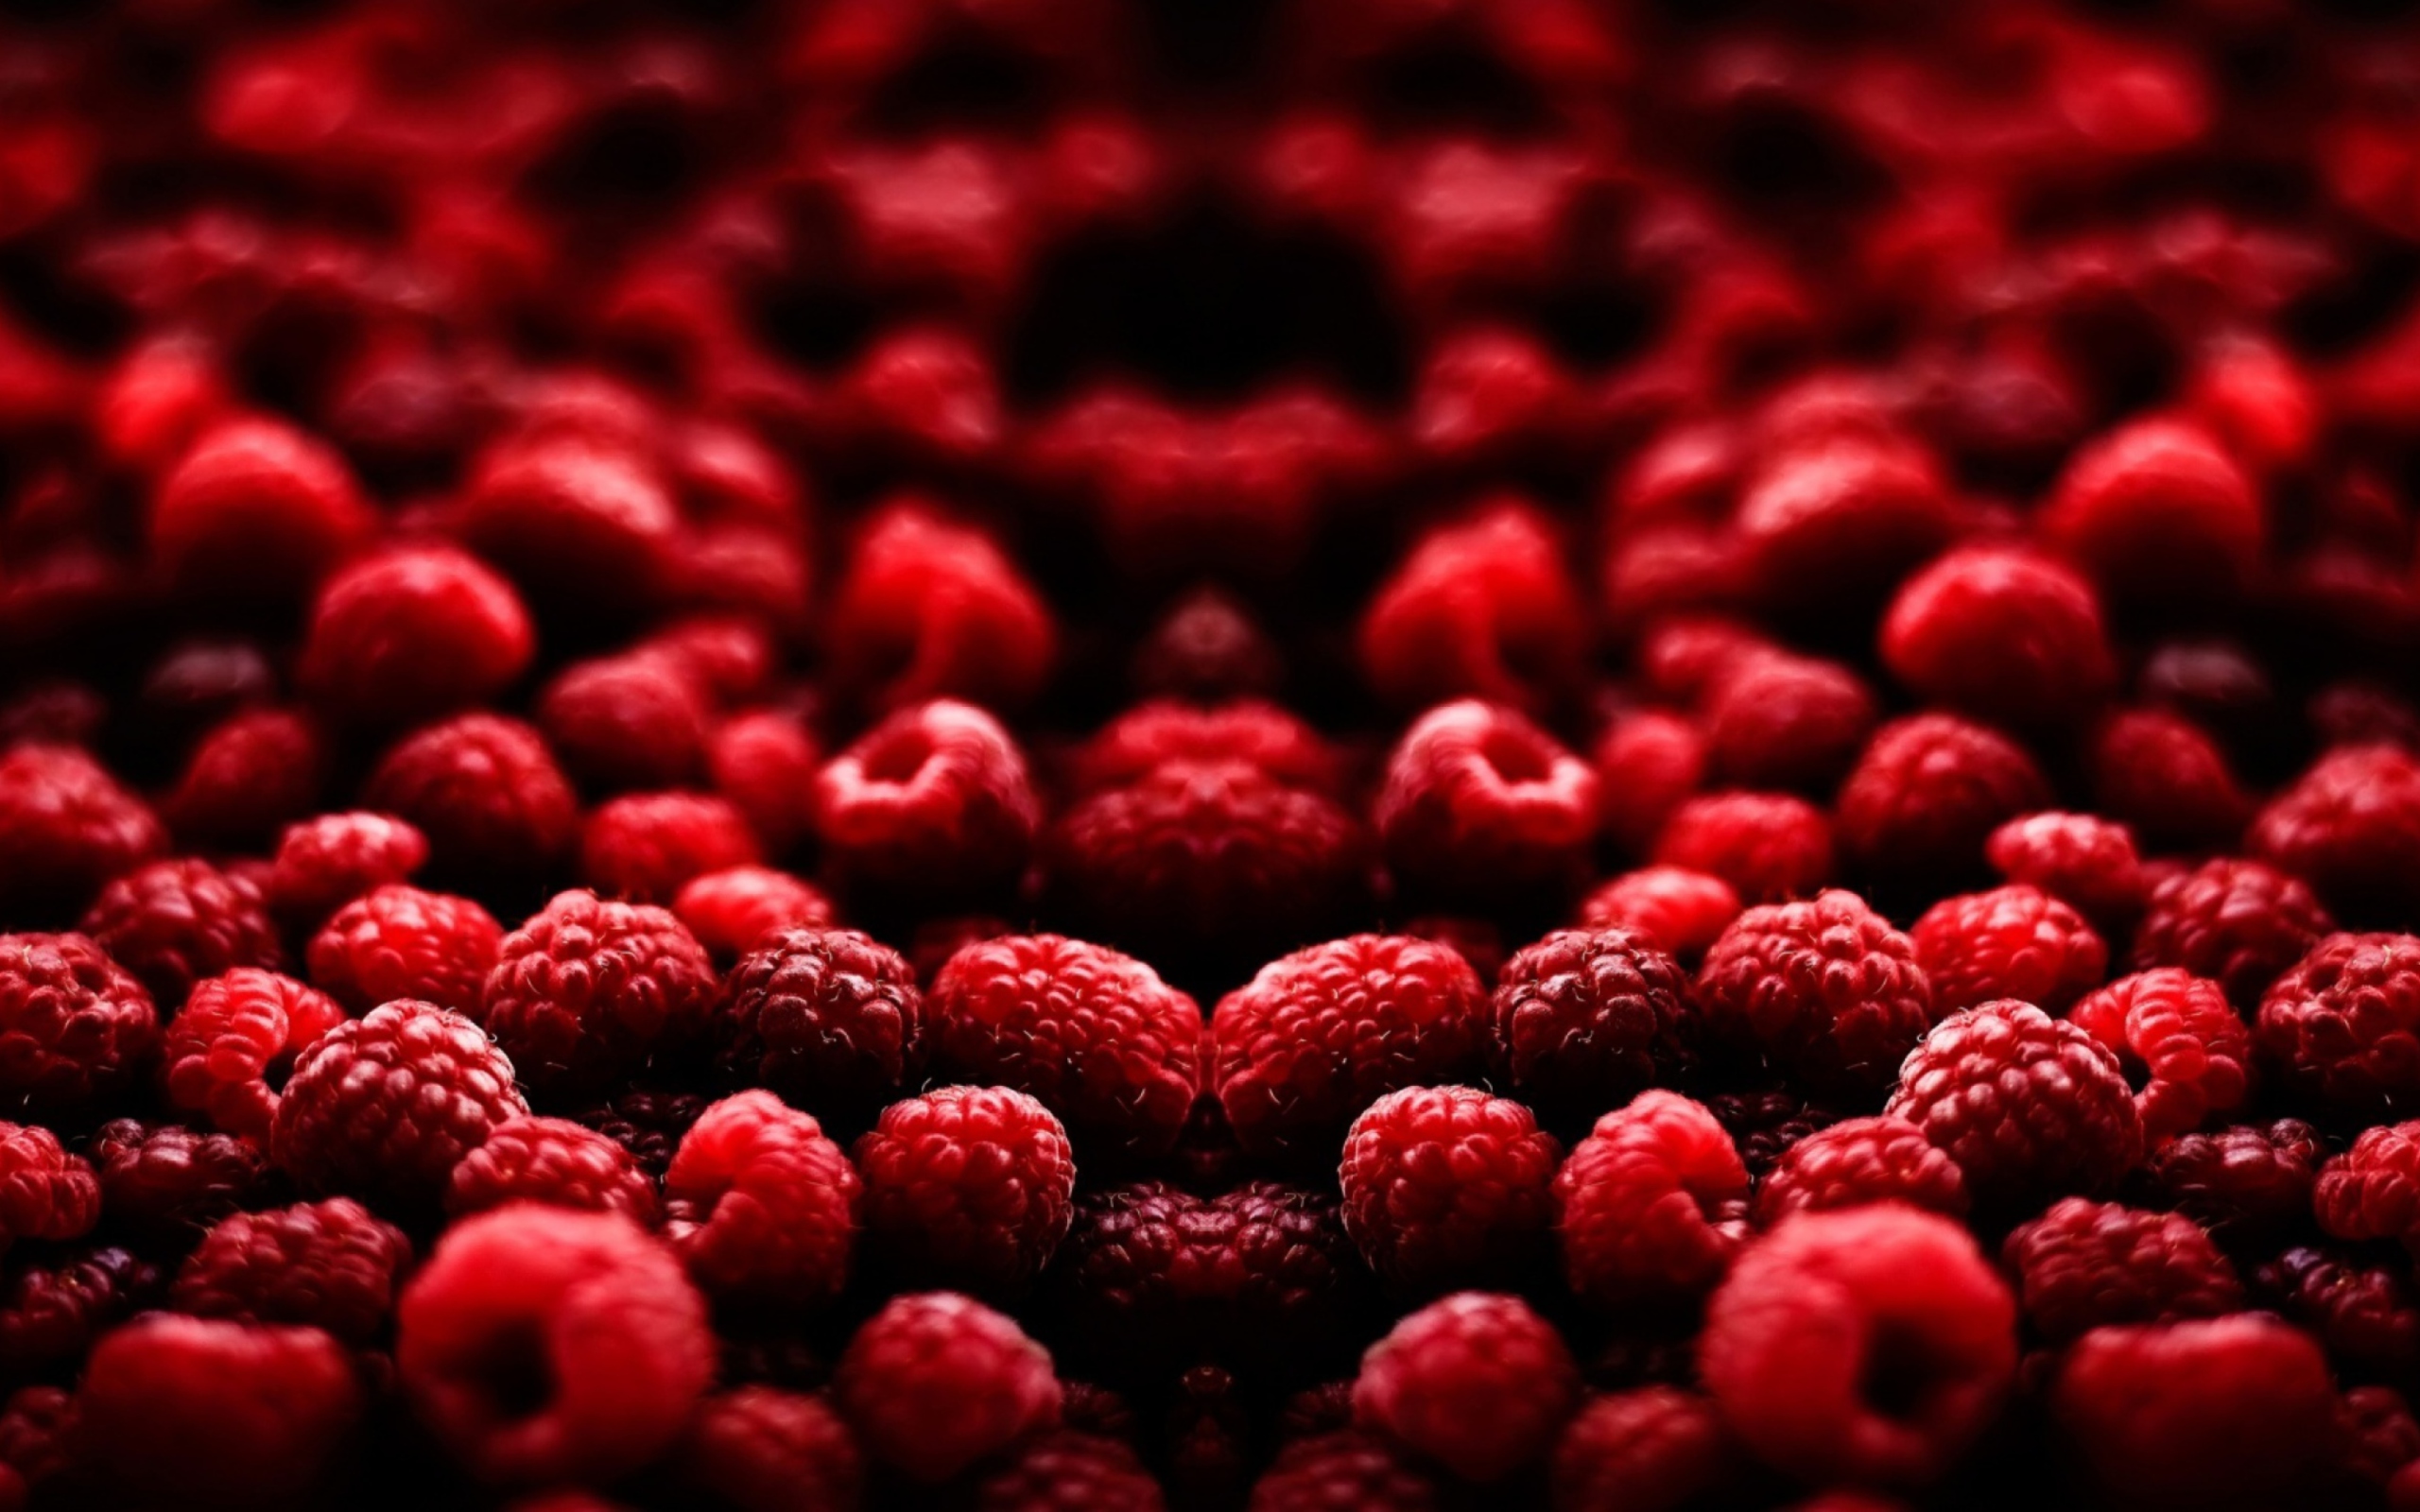 Red Raspberries wallpaper 2560x1600